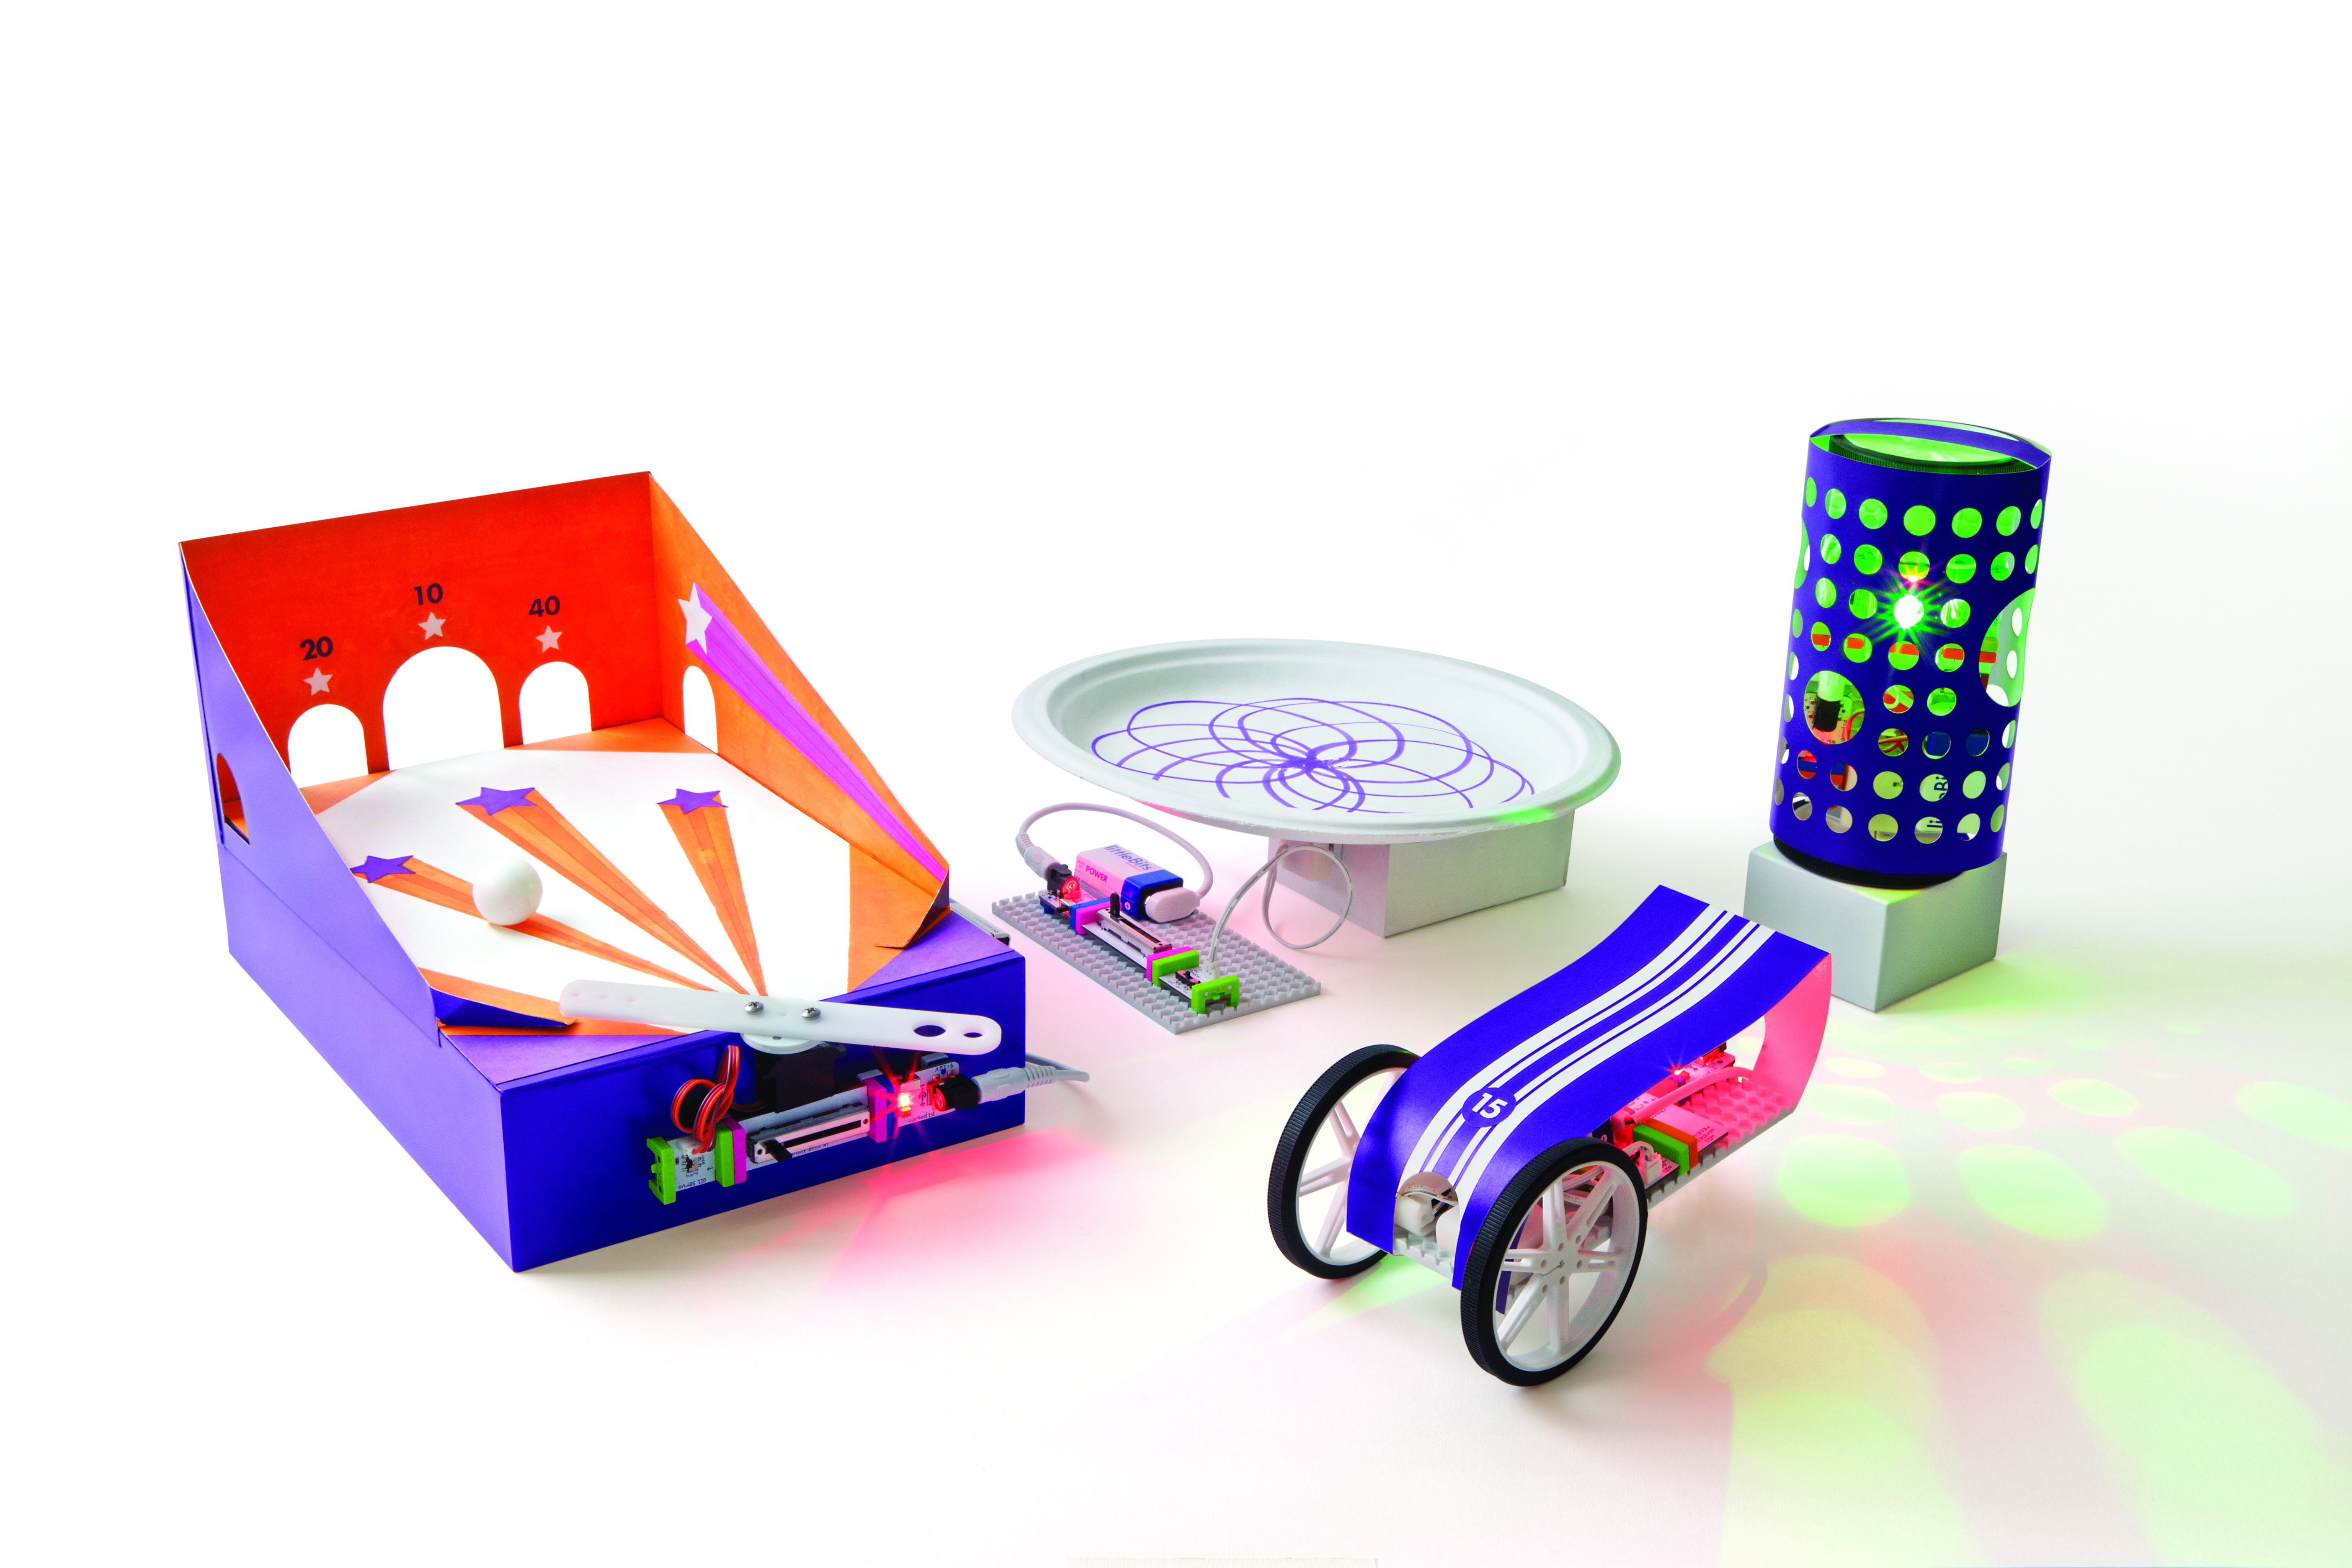 LittleBits Gizmos & Gadgets kit